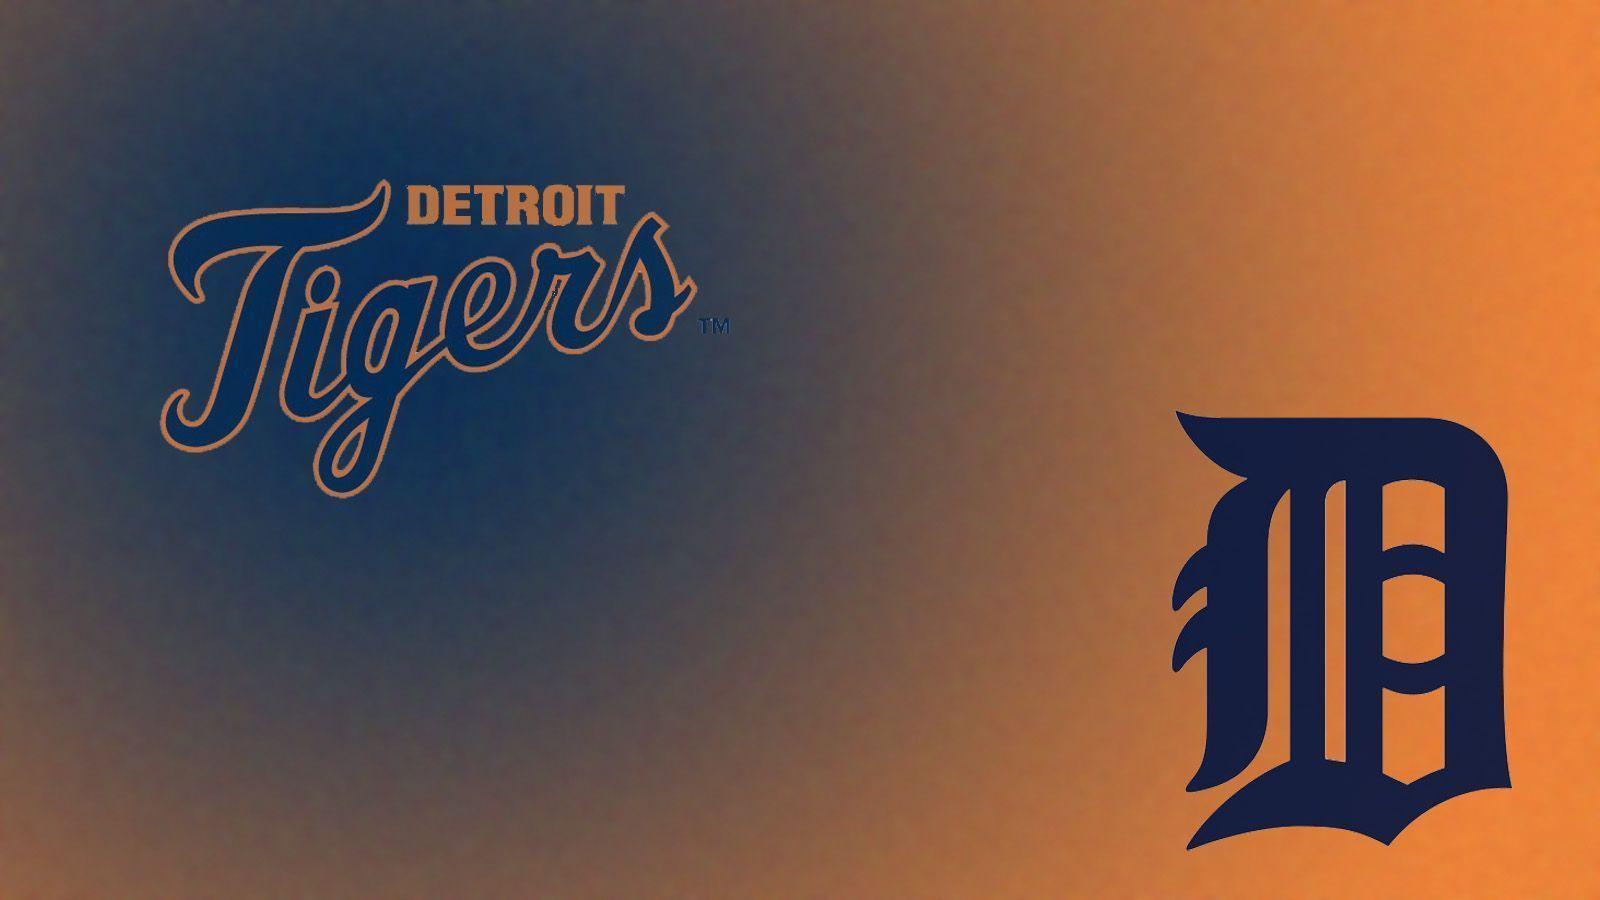 Detroit Tigers Symbols Backgrounds